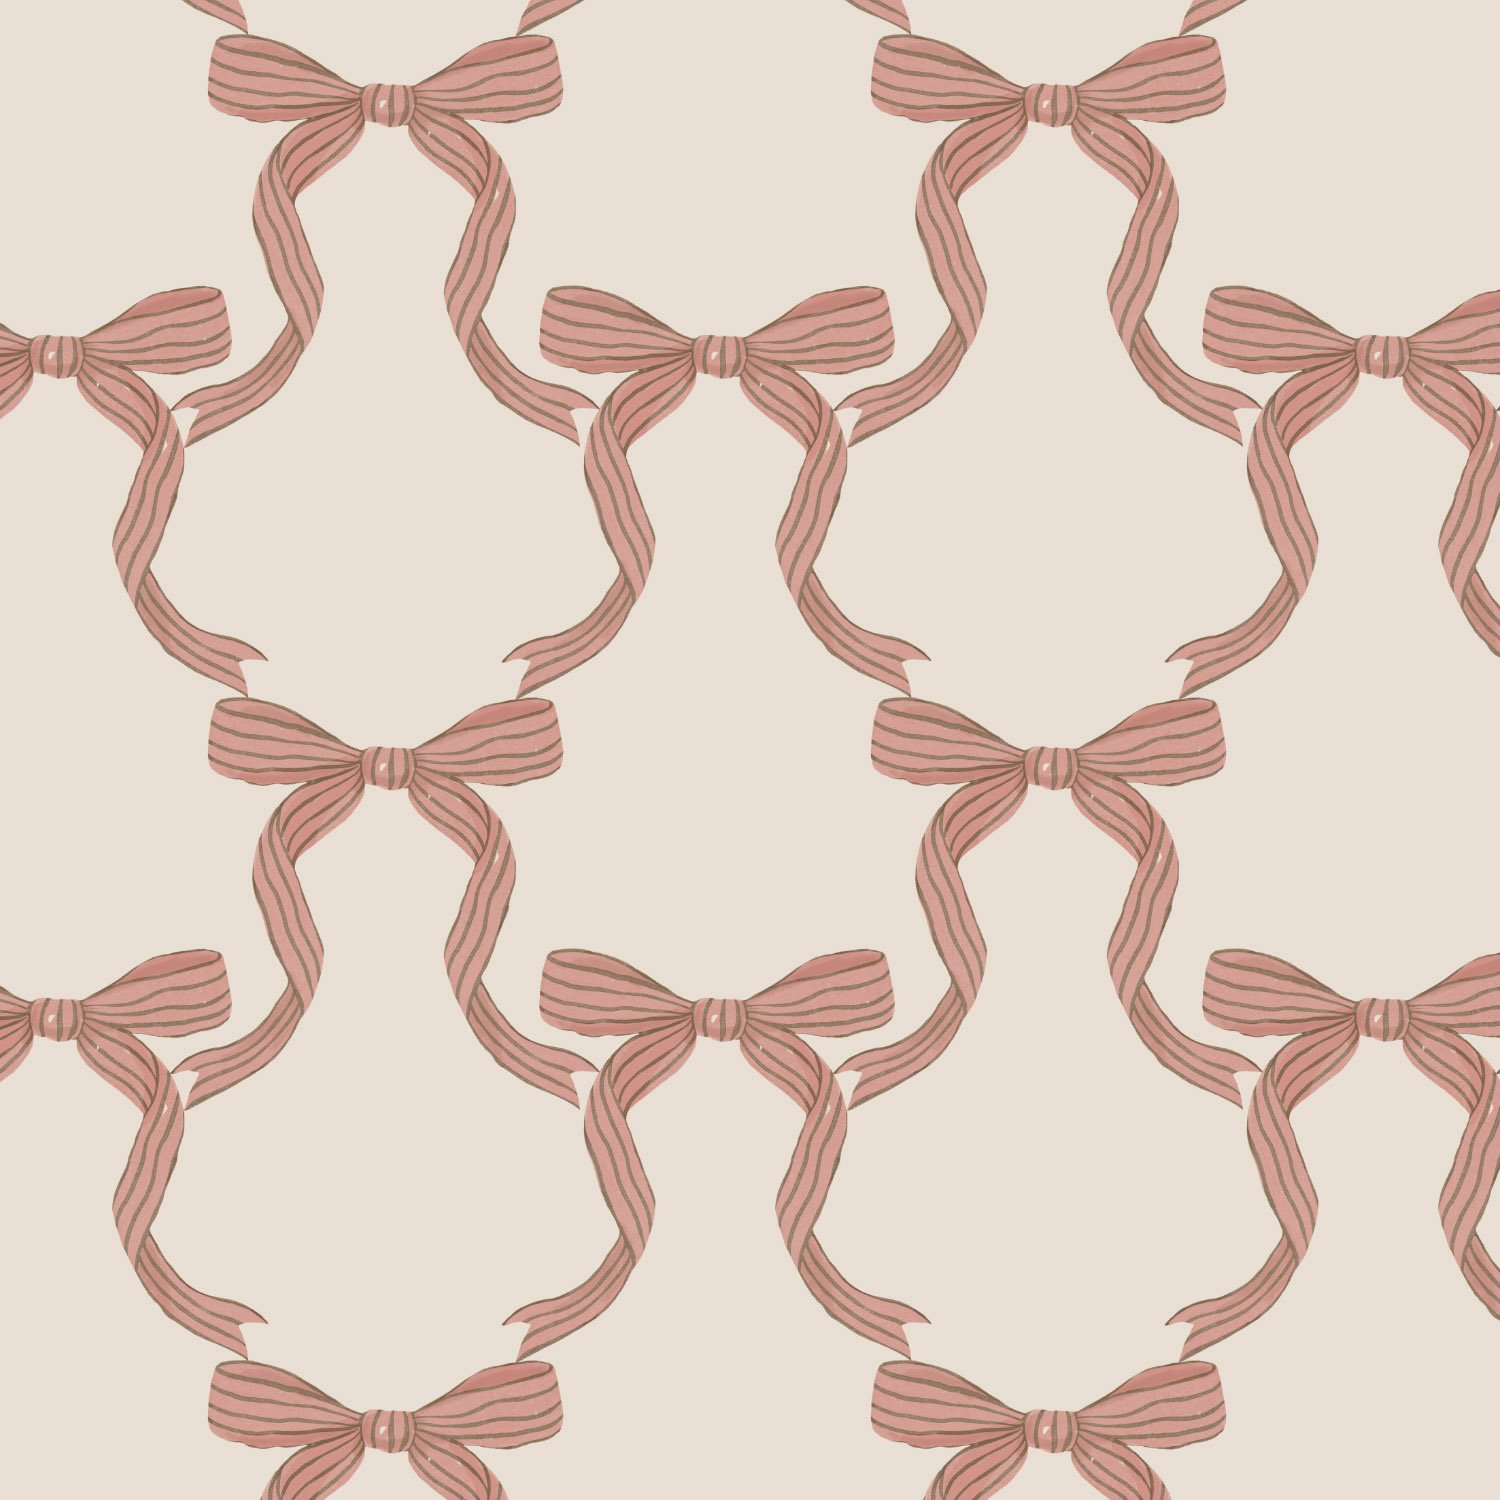 5x5 Sample - Pink and Brown Ribbons.jpg